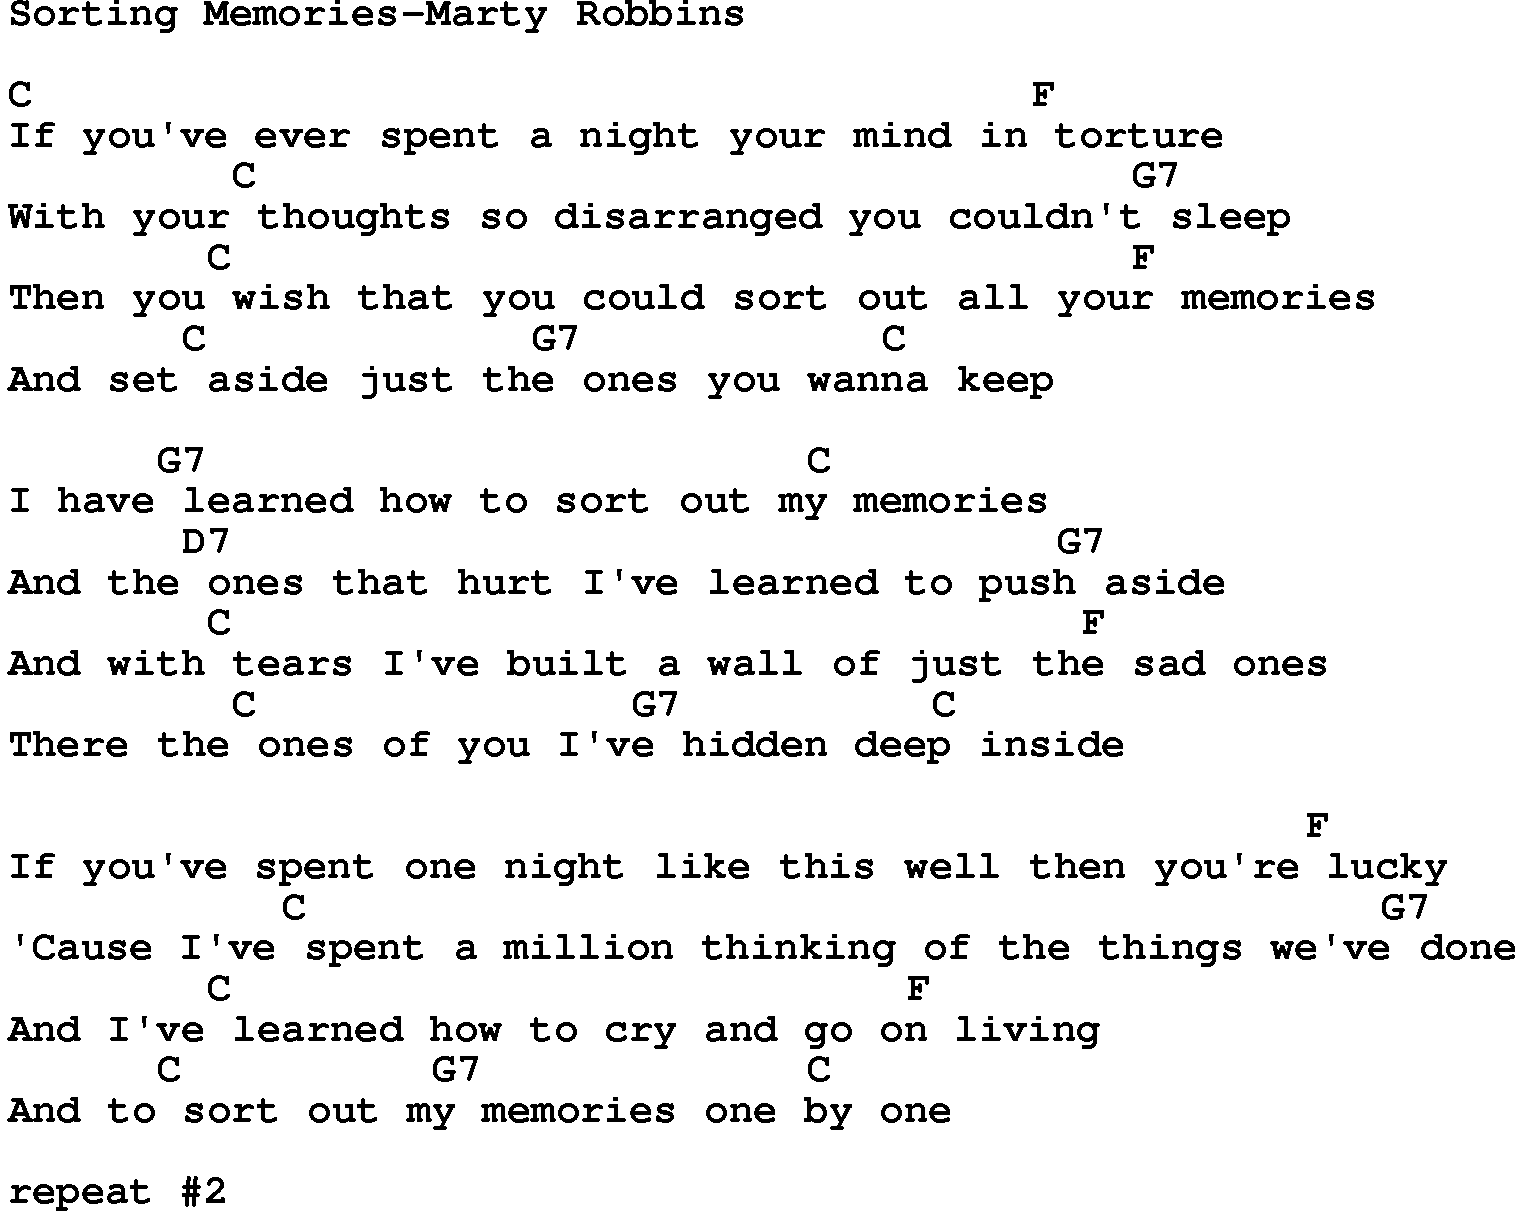 Country music song: Sorting Memories-Marty Robbins lyrics and chords